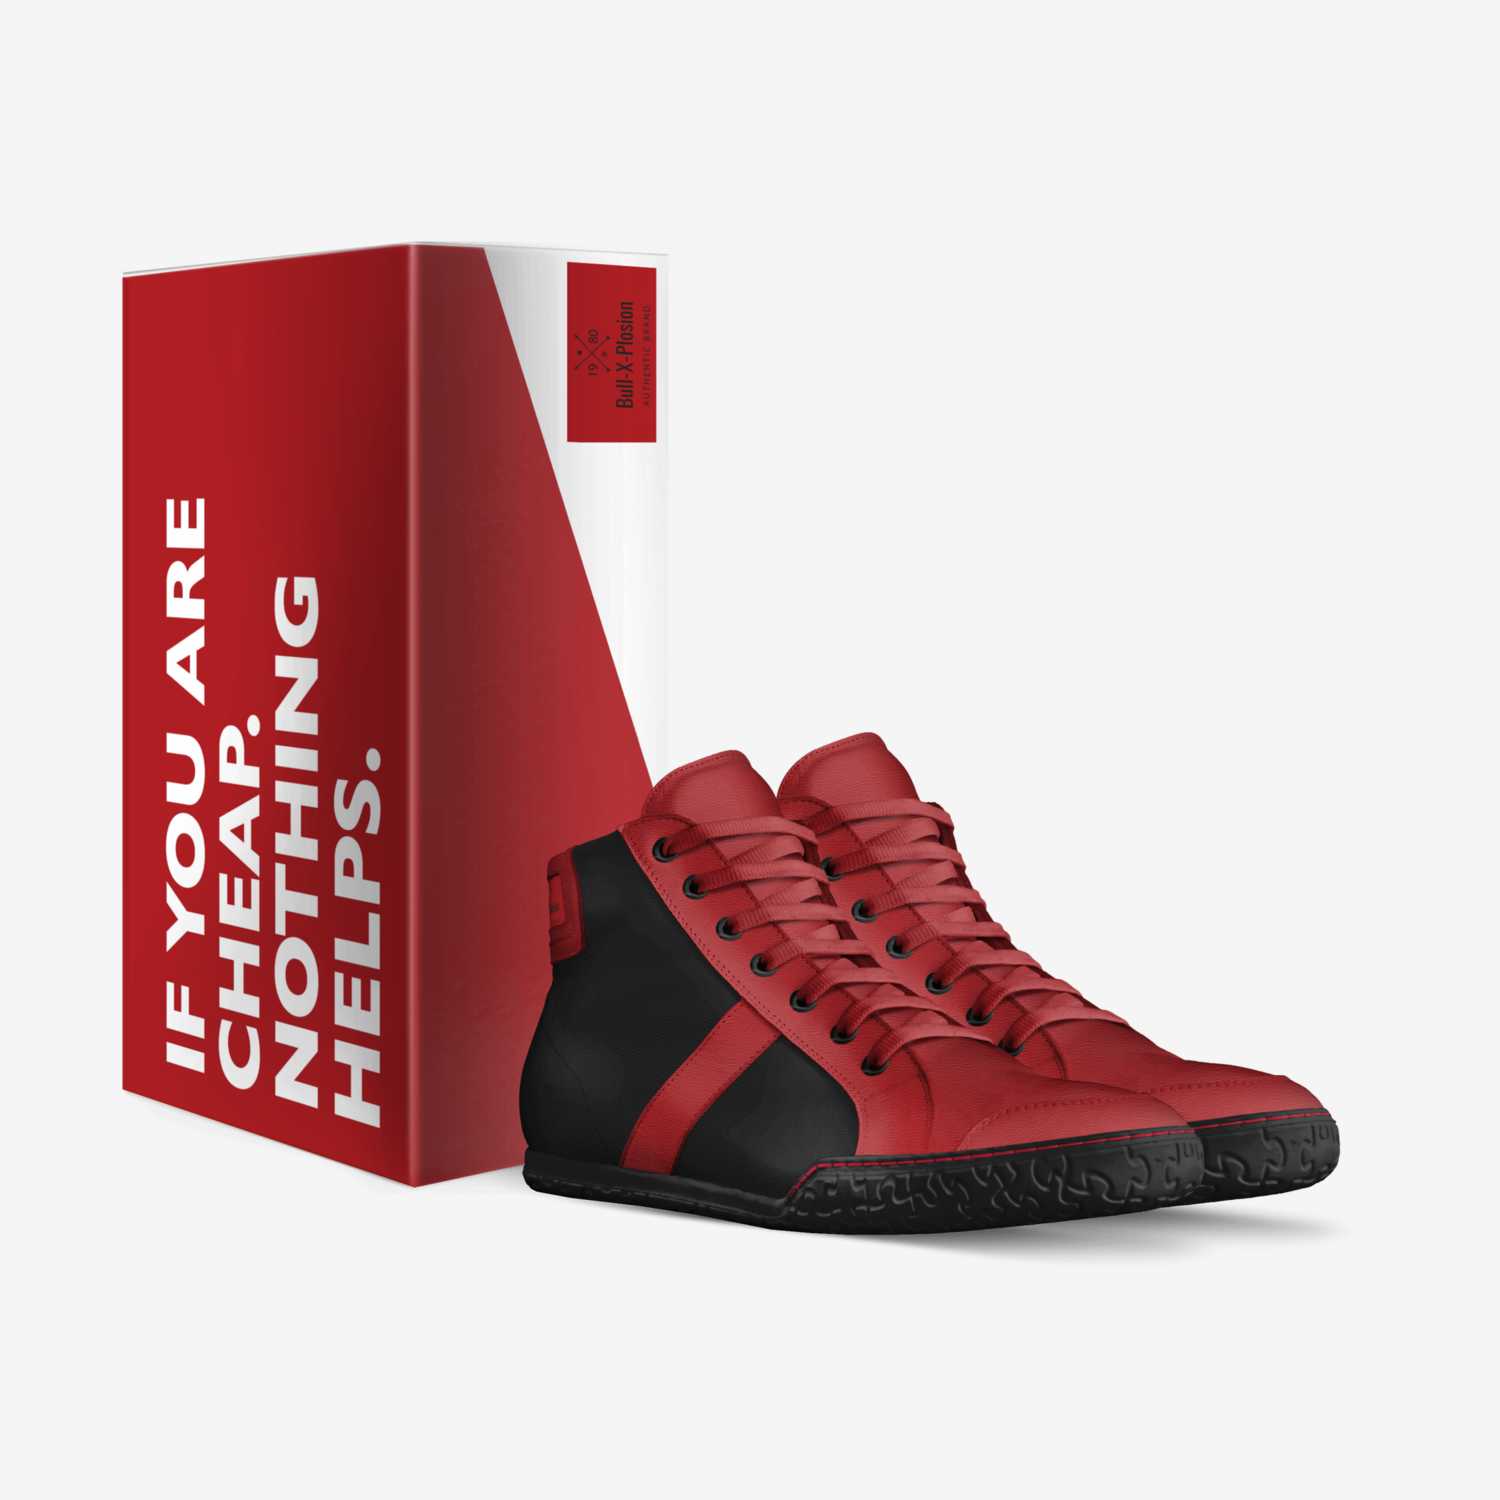 Bull-X-Plosion custom made in Italy shoes by Nikolay Kotov | Box view